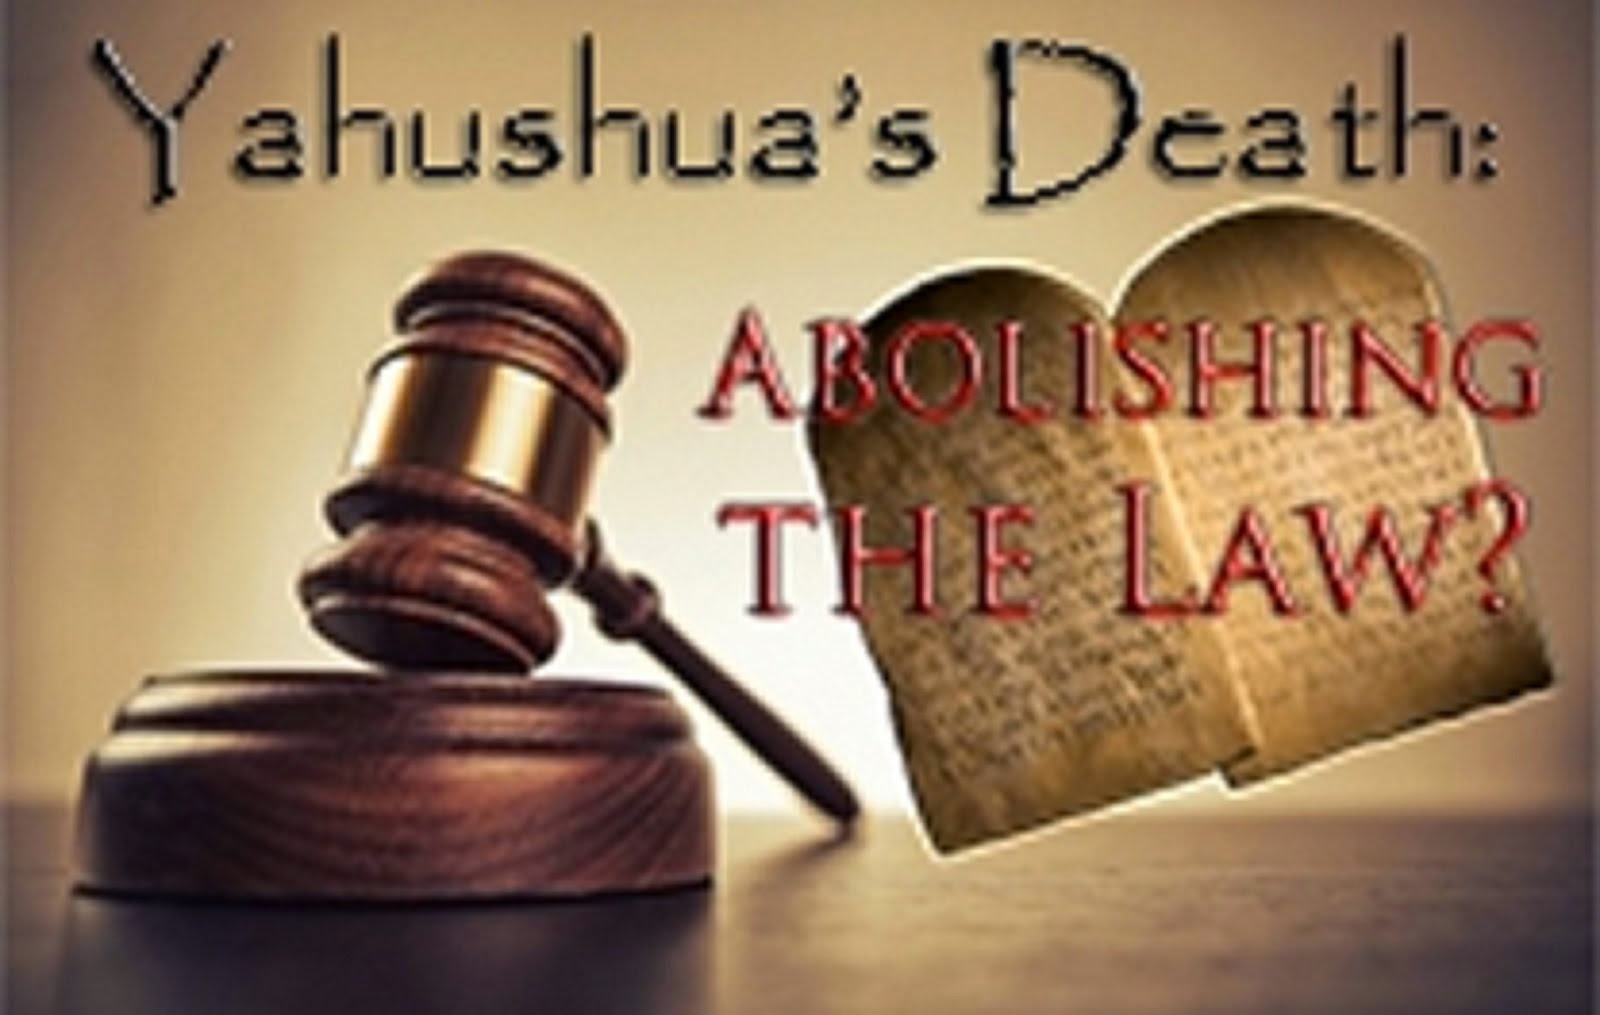 YAHUSHUA'S DEATH - ABOLISHING THE LAW?